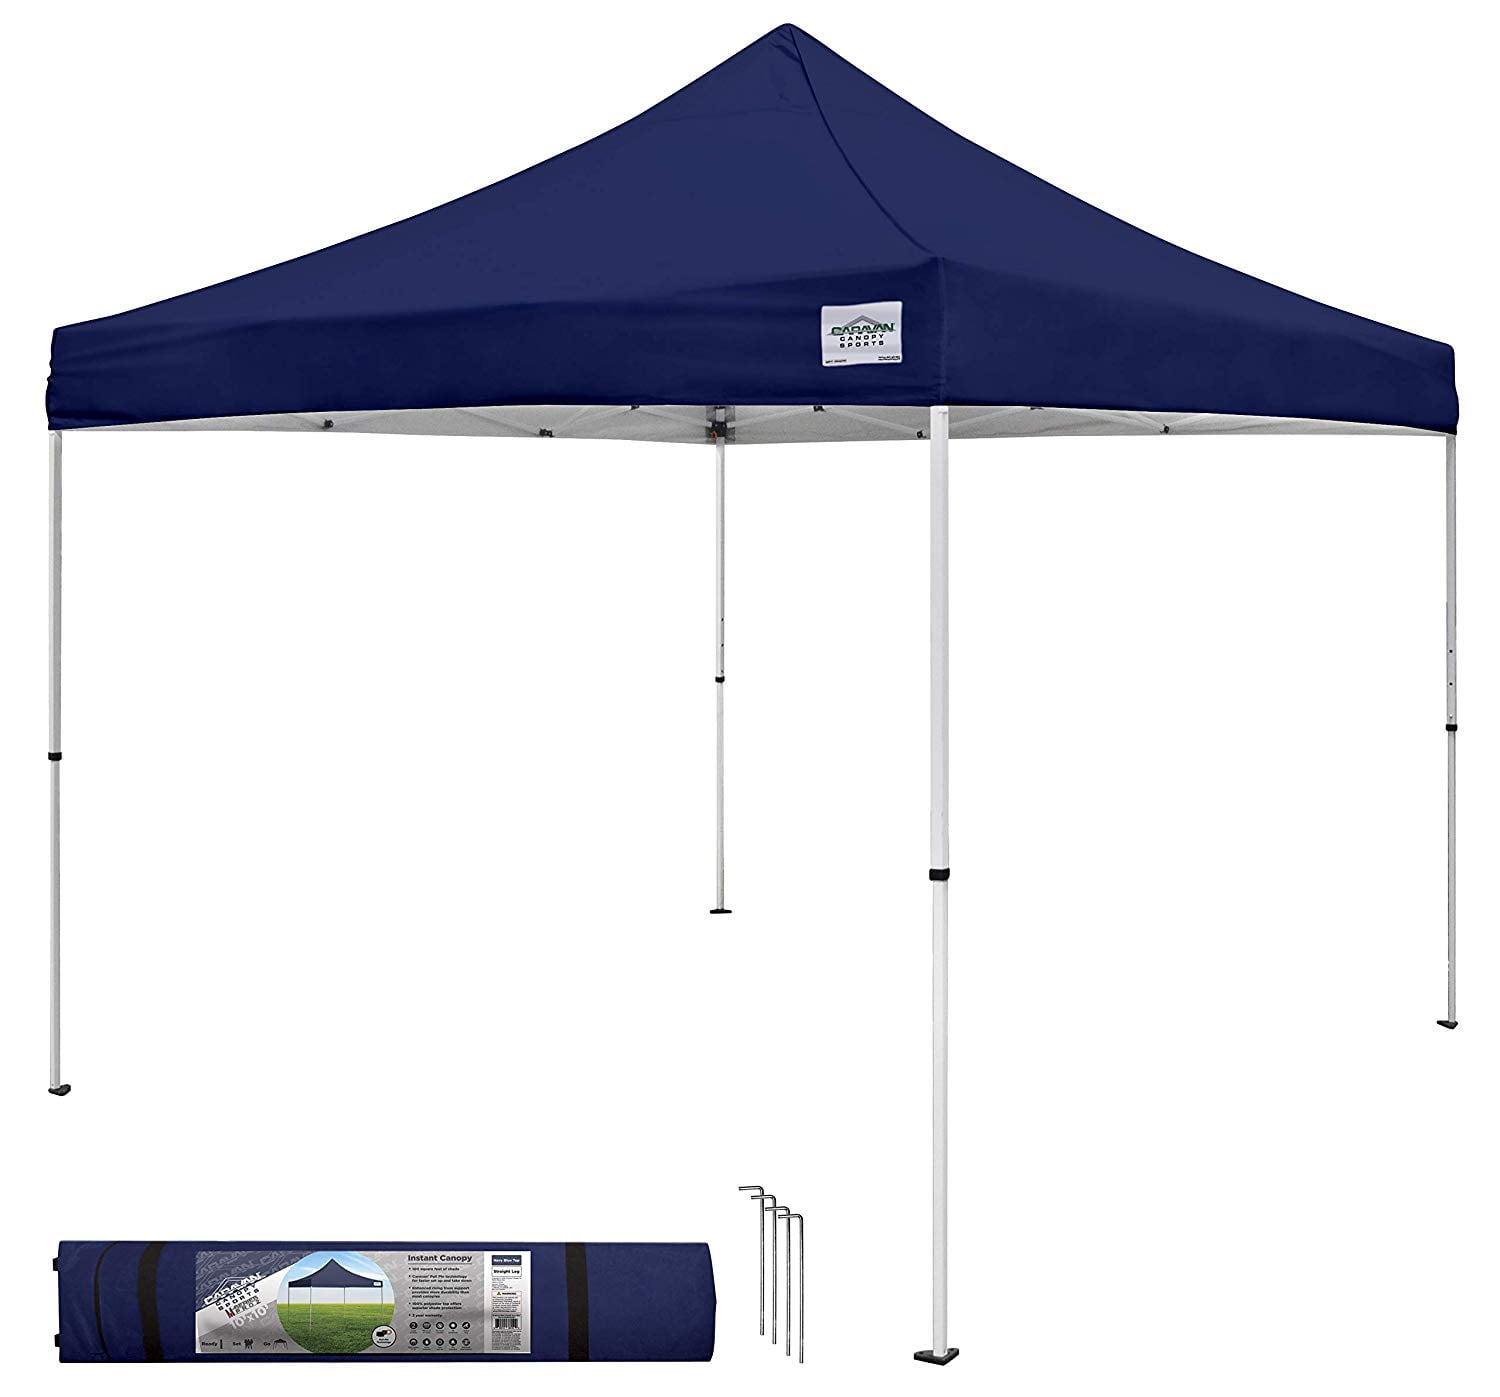 Caravan Sports M-Series 2 Pro Instant Canopy Kit, 10'x10', Navy Blue